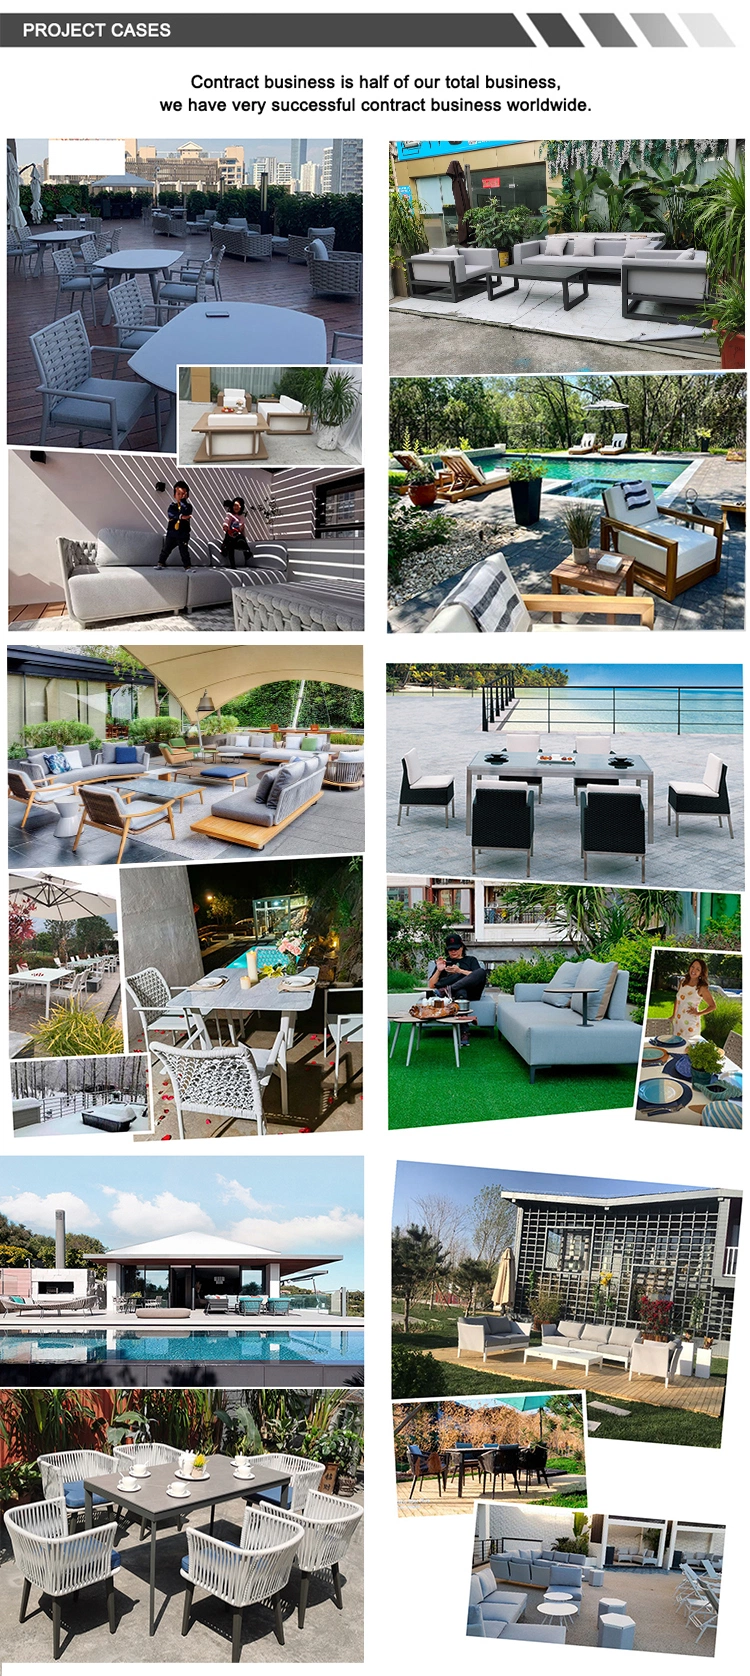 Home Patio Furniture Modern Outdoor Leisure Garden Aluminum Rattan Sectional Sofa Set